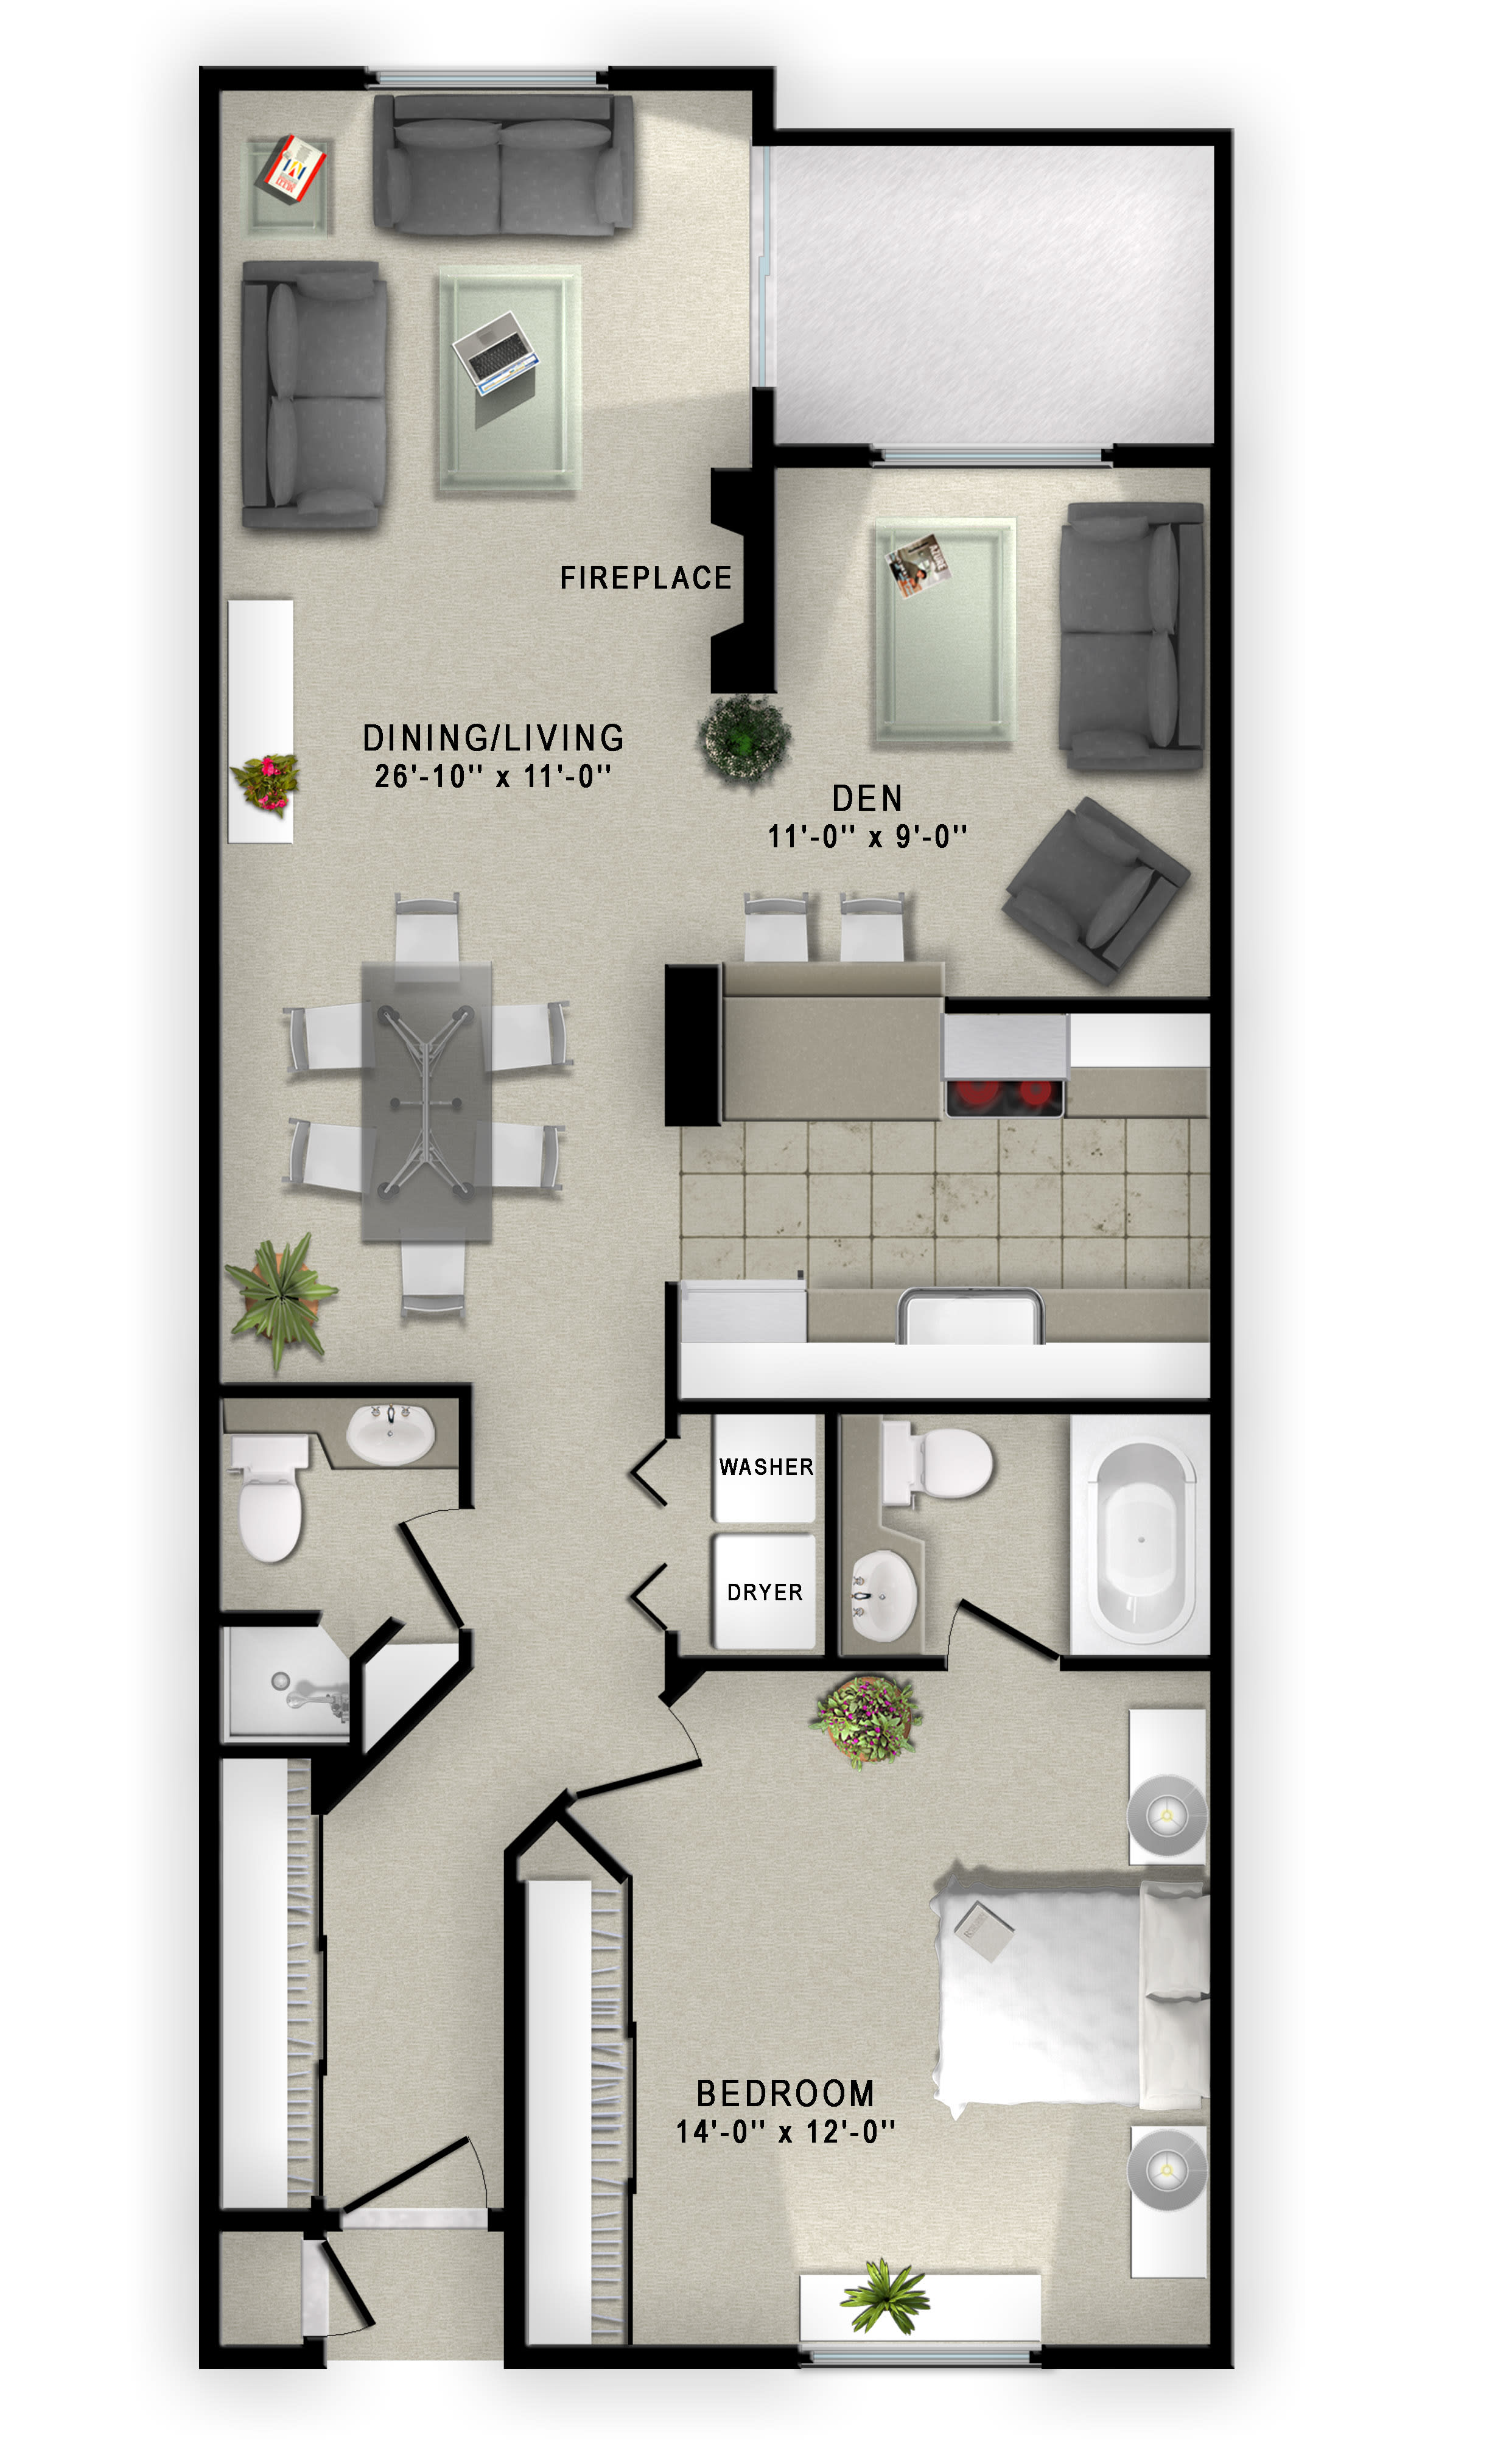 Imperial Wisteria 1 bedroom 1 bathroom floor plan at Pecan Acres